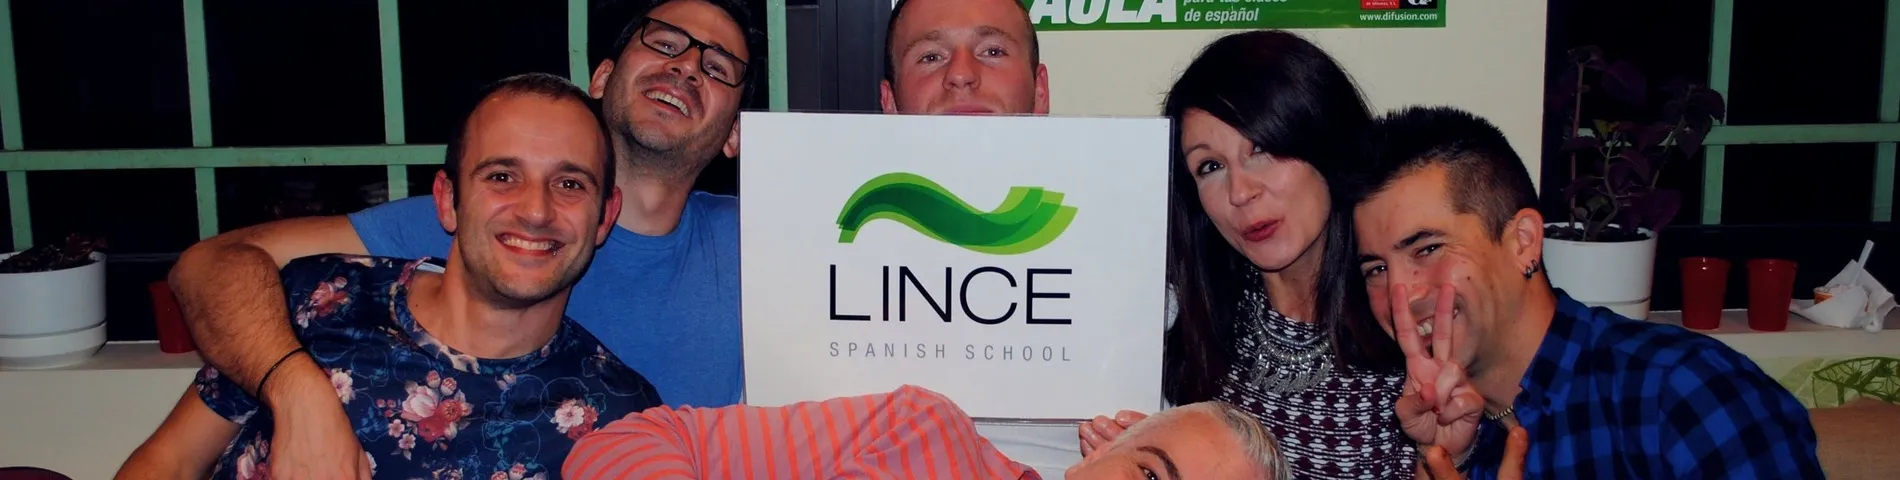 Lince Spanish School immagine 1